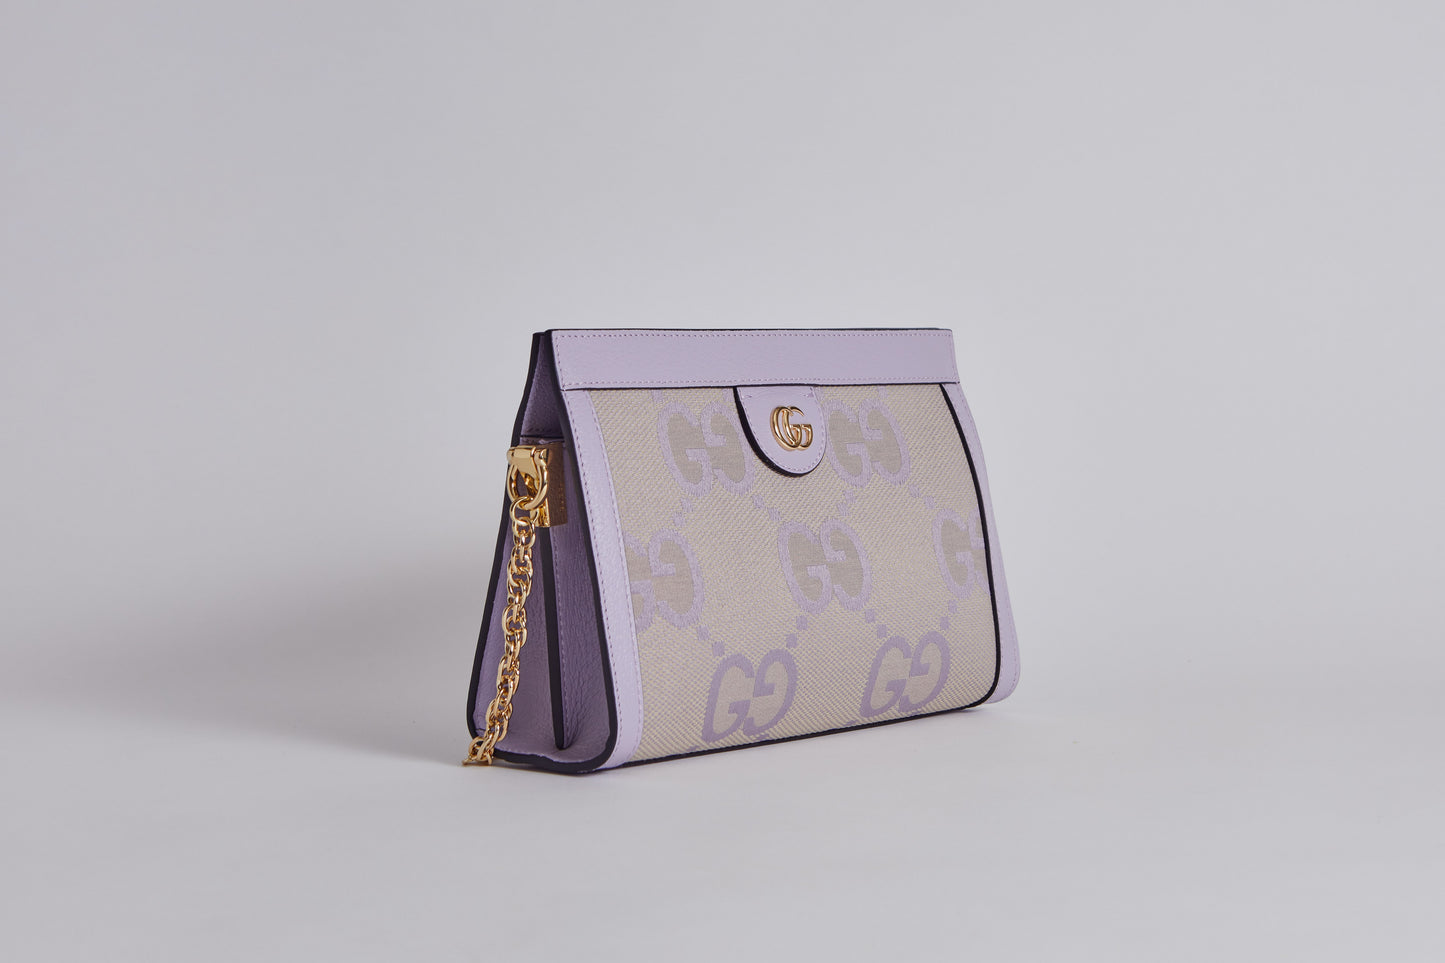 Gucci Ophidia jumbo GG small shoulder bag - Lilac